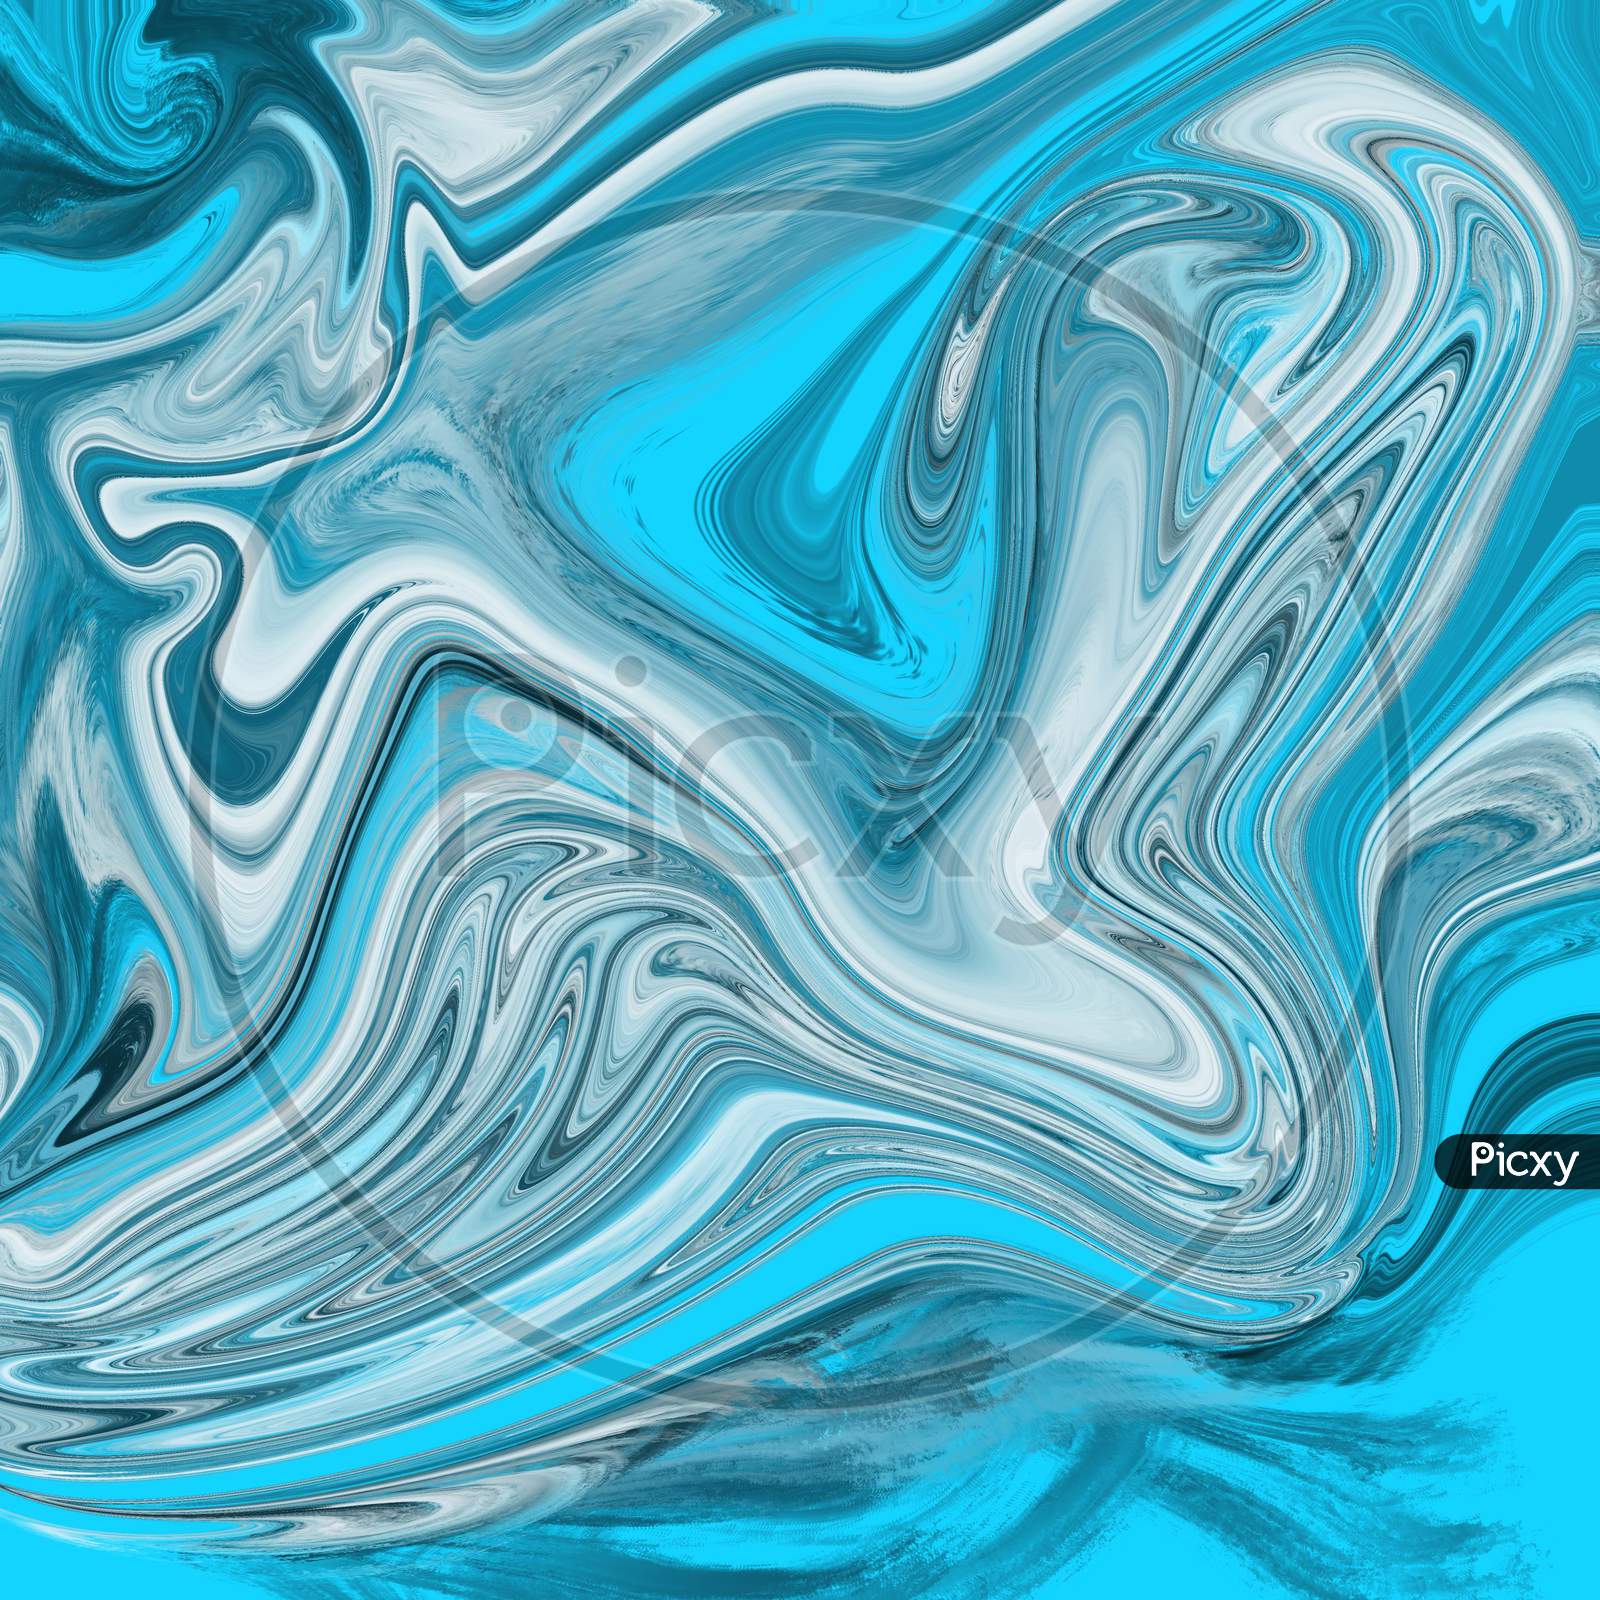 Abstract light blue fluid paint background